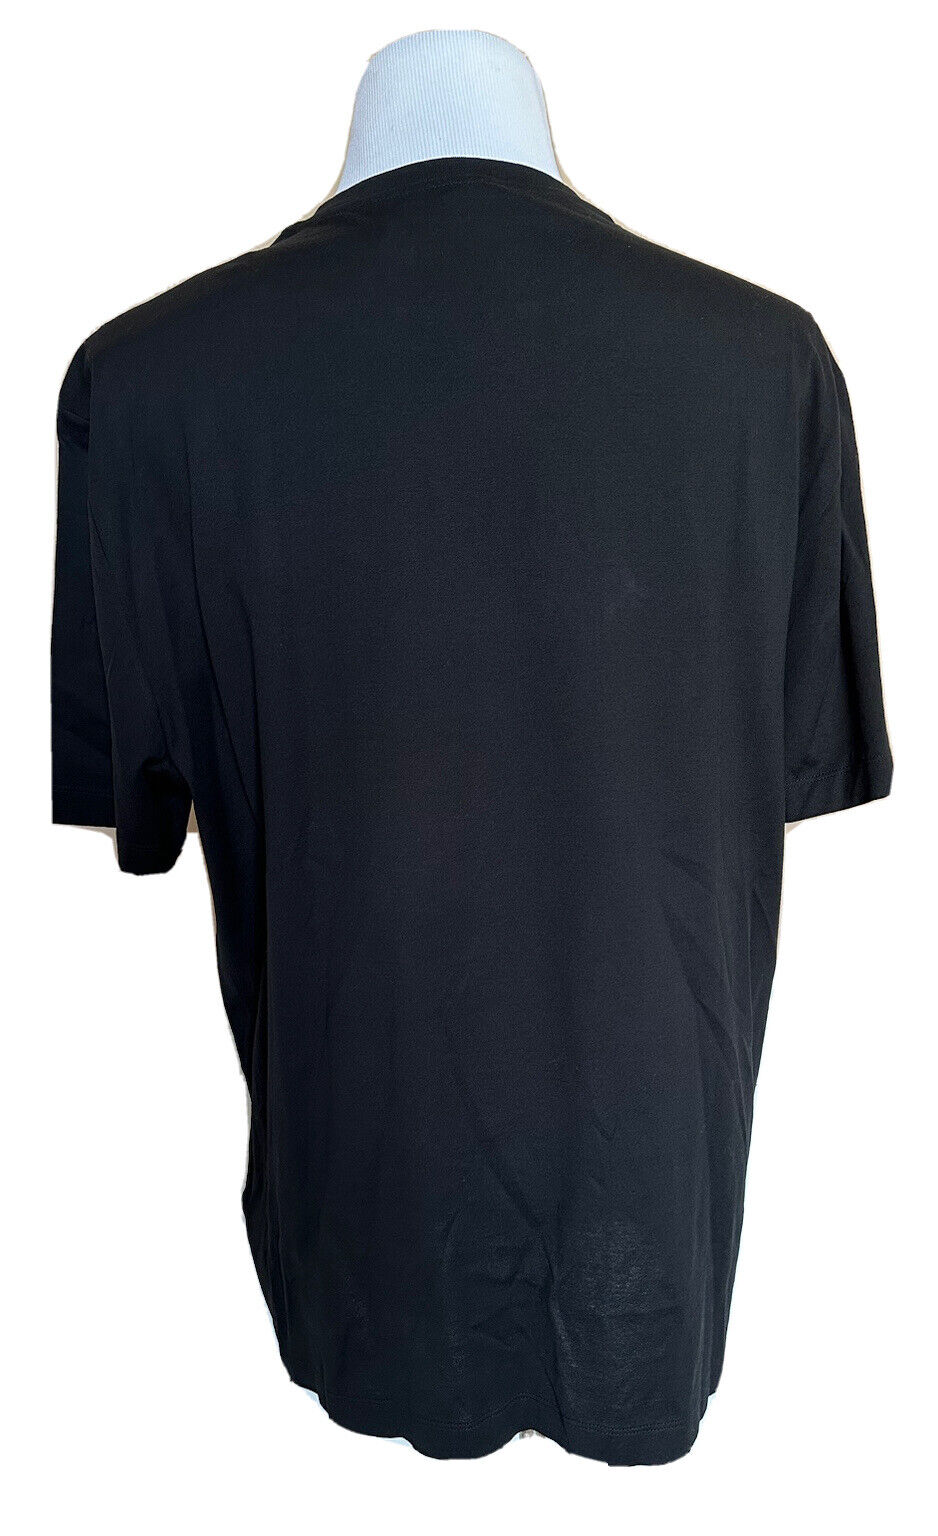 NWT $450 Versace Medusa Printed Black Mitchel Fit Jersey T-Shirt L 1003916